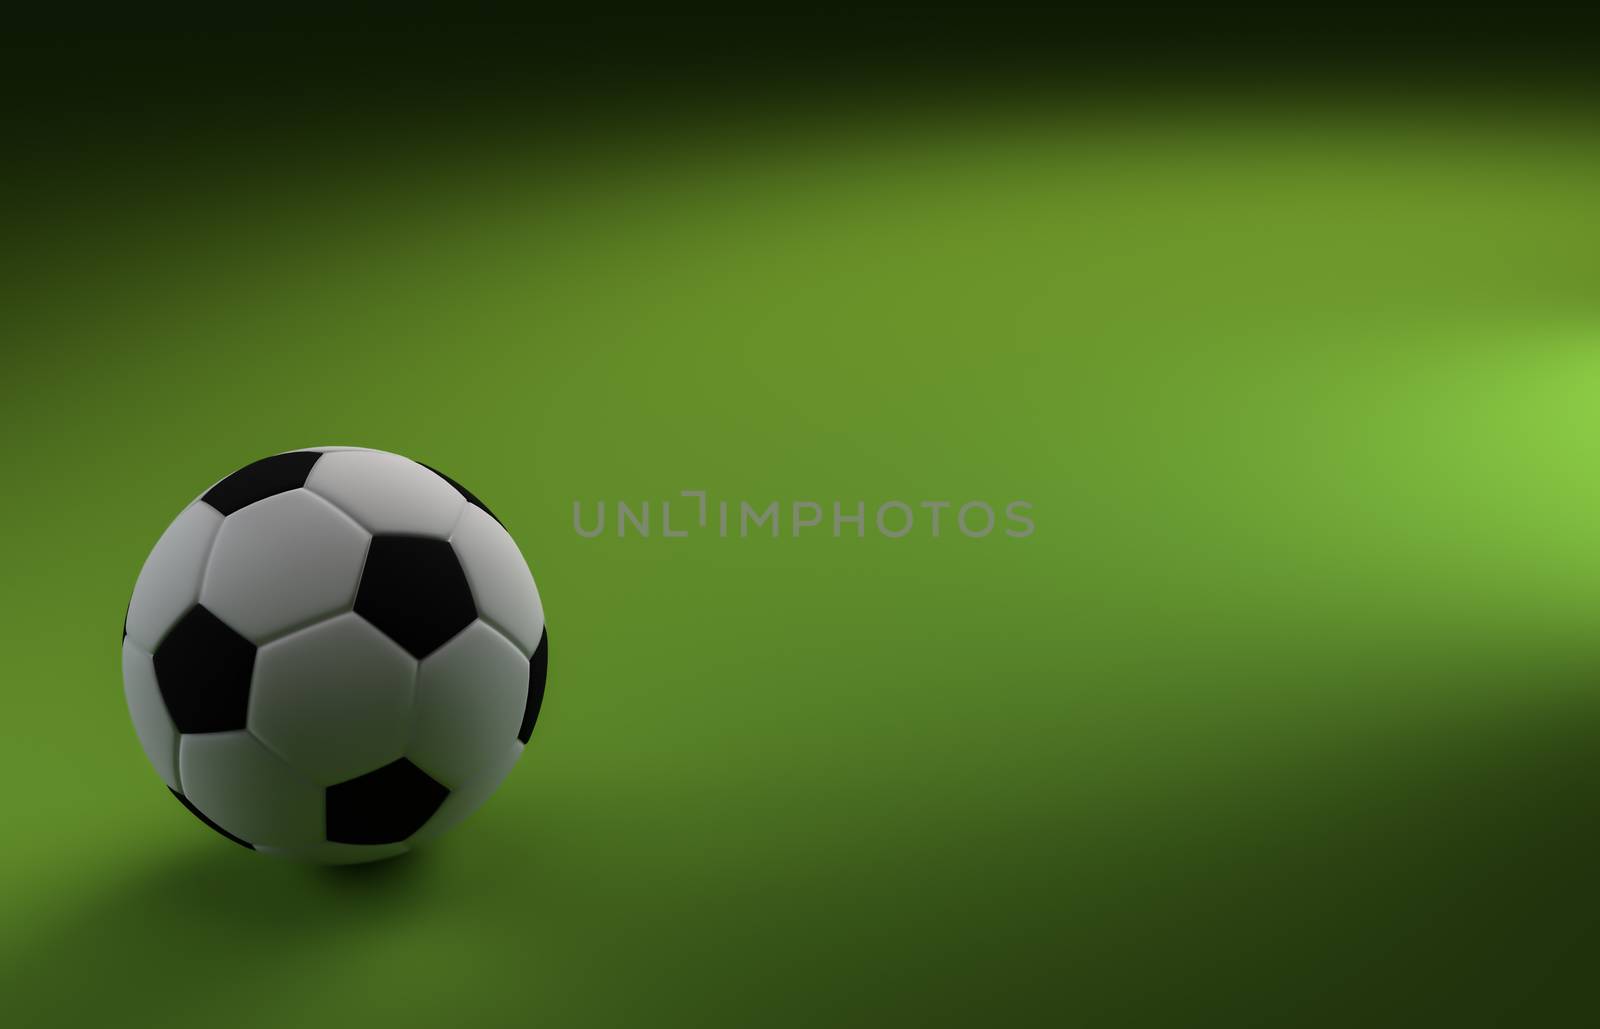 Football on Green Background by Daniel_Wiedemann